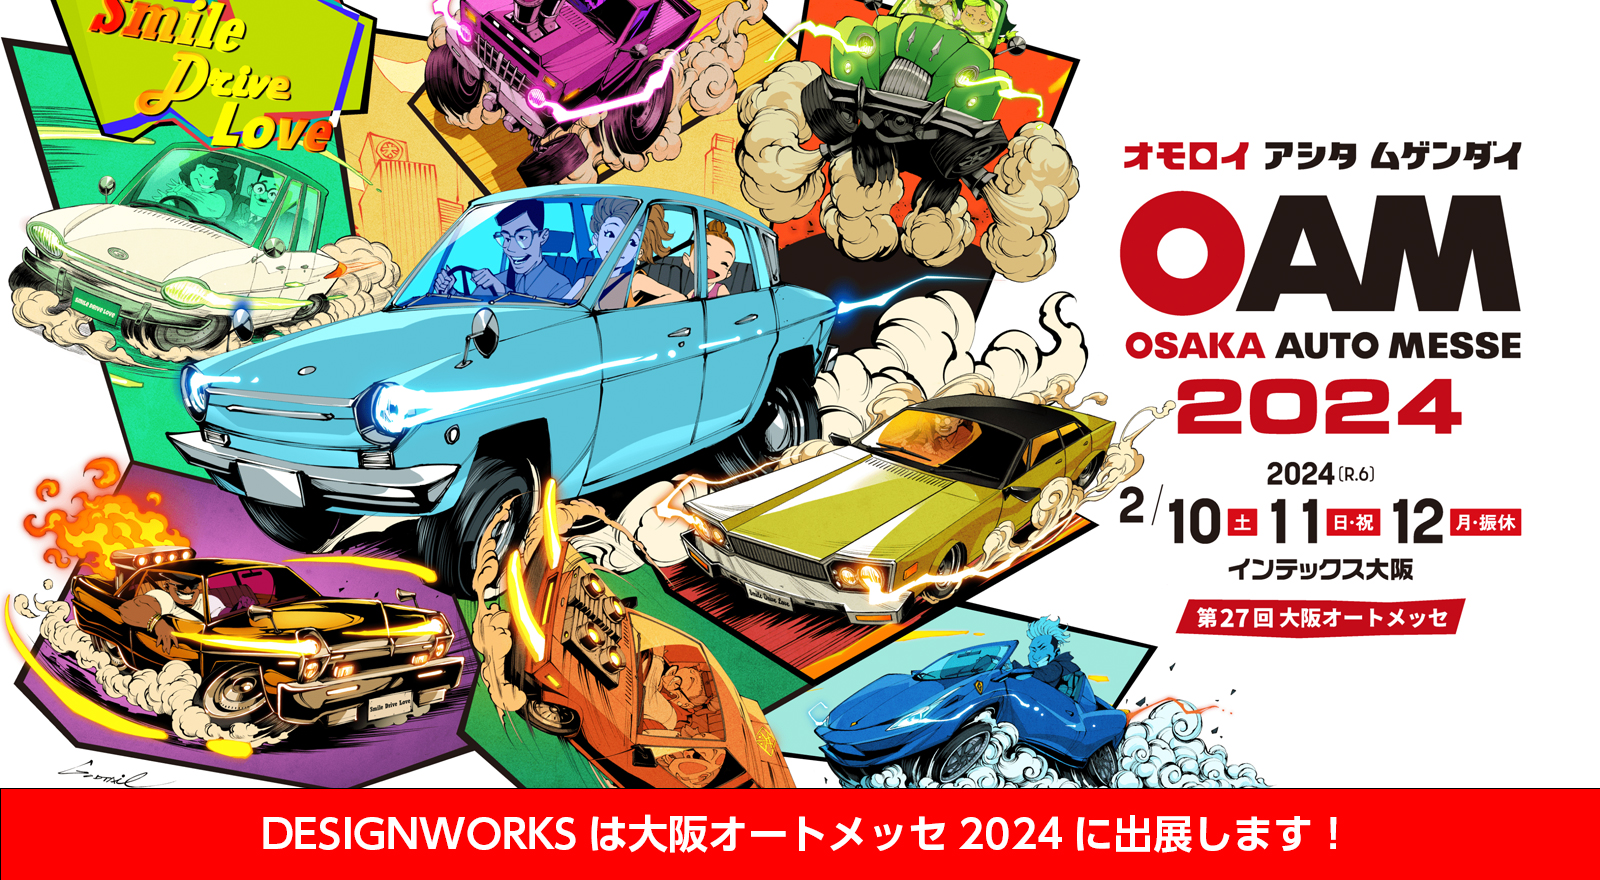 DESIGN WORKSは 大阪オートメッセ2024 に出展します！
